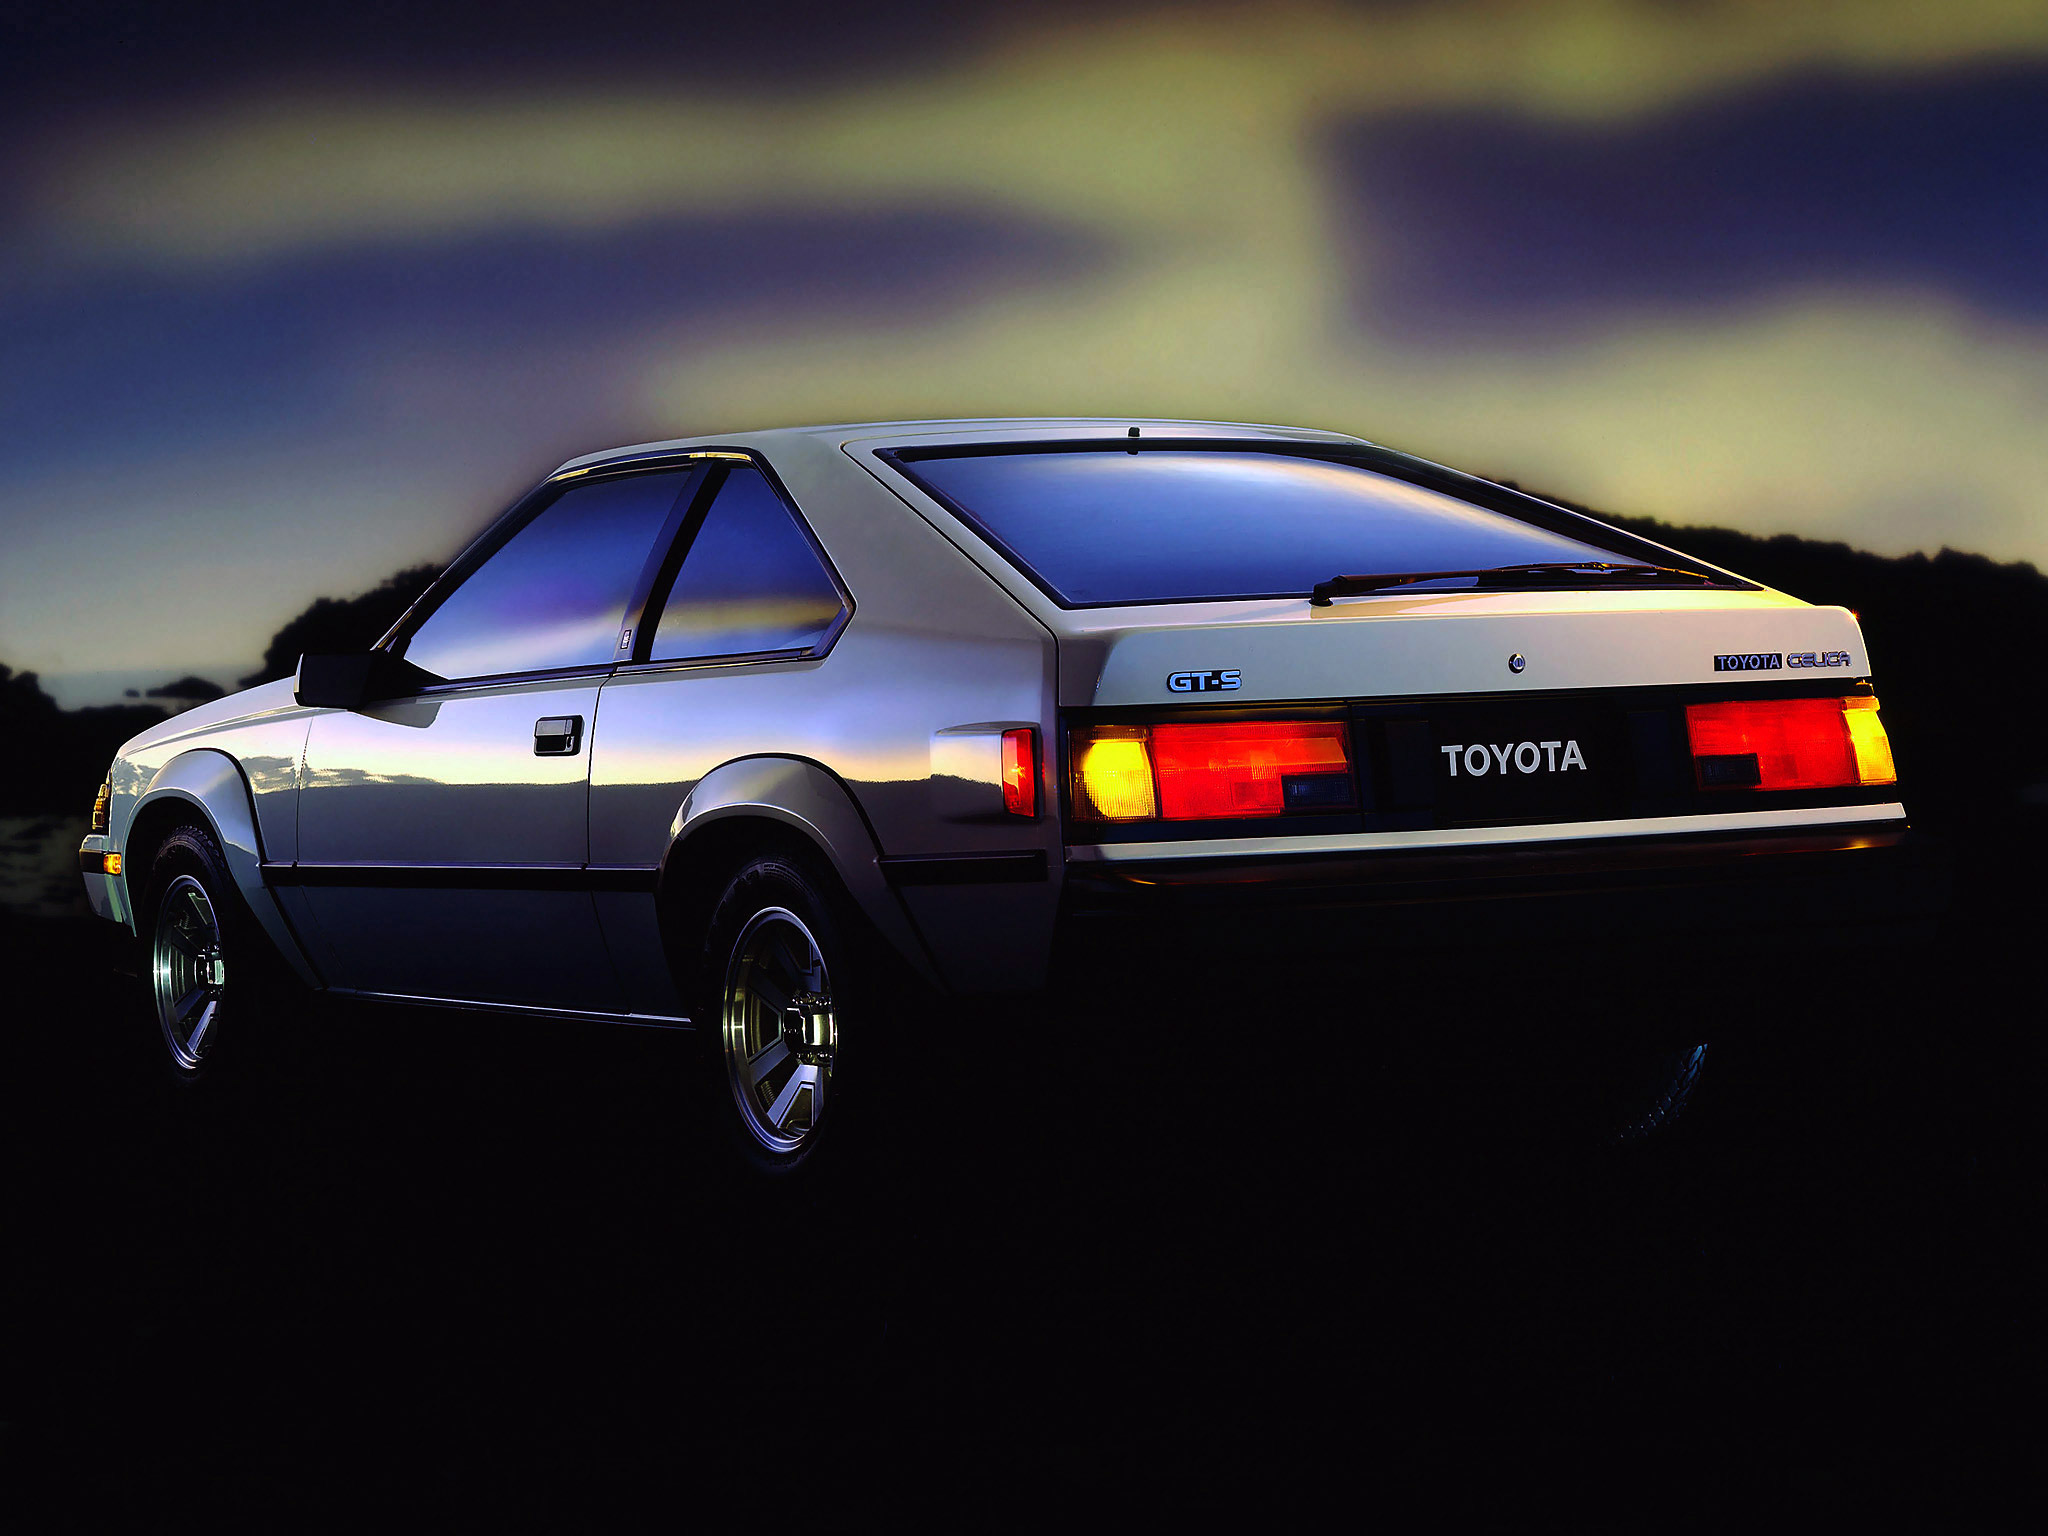  1982 Toyota Celica Liftback Wallpaper.